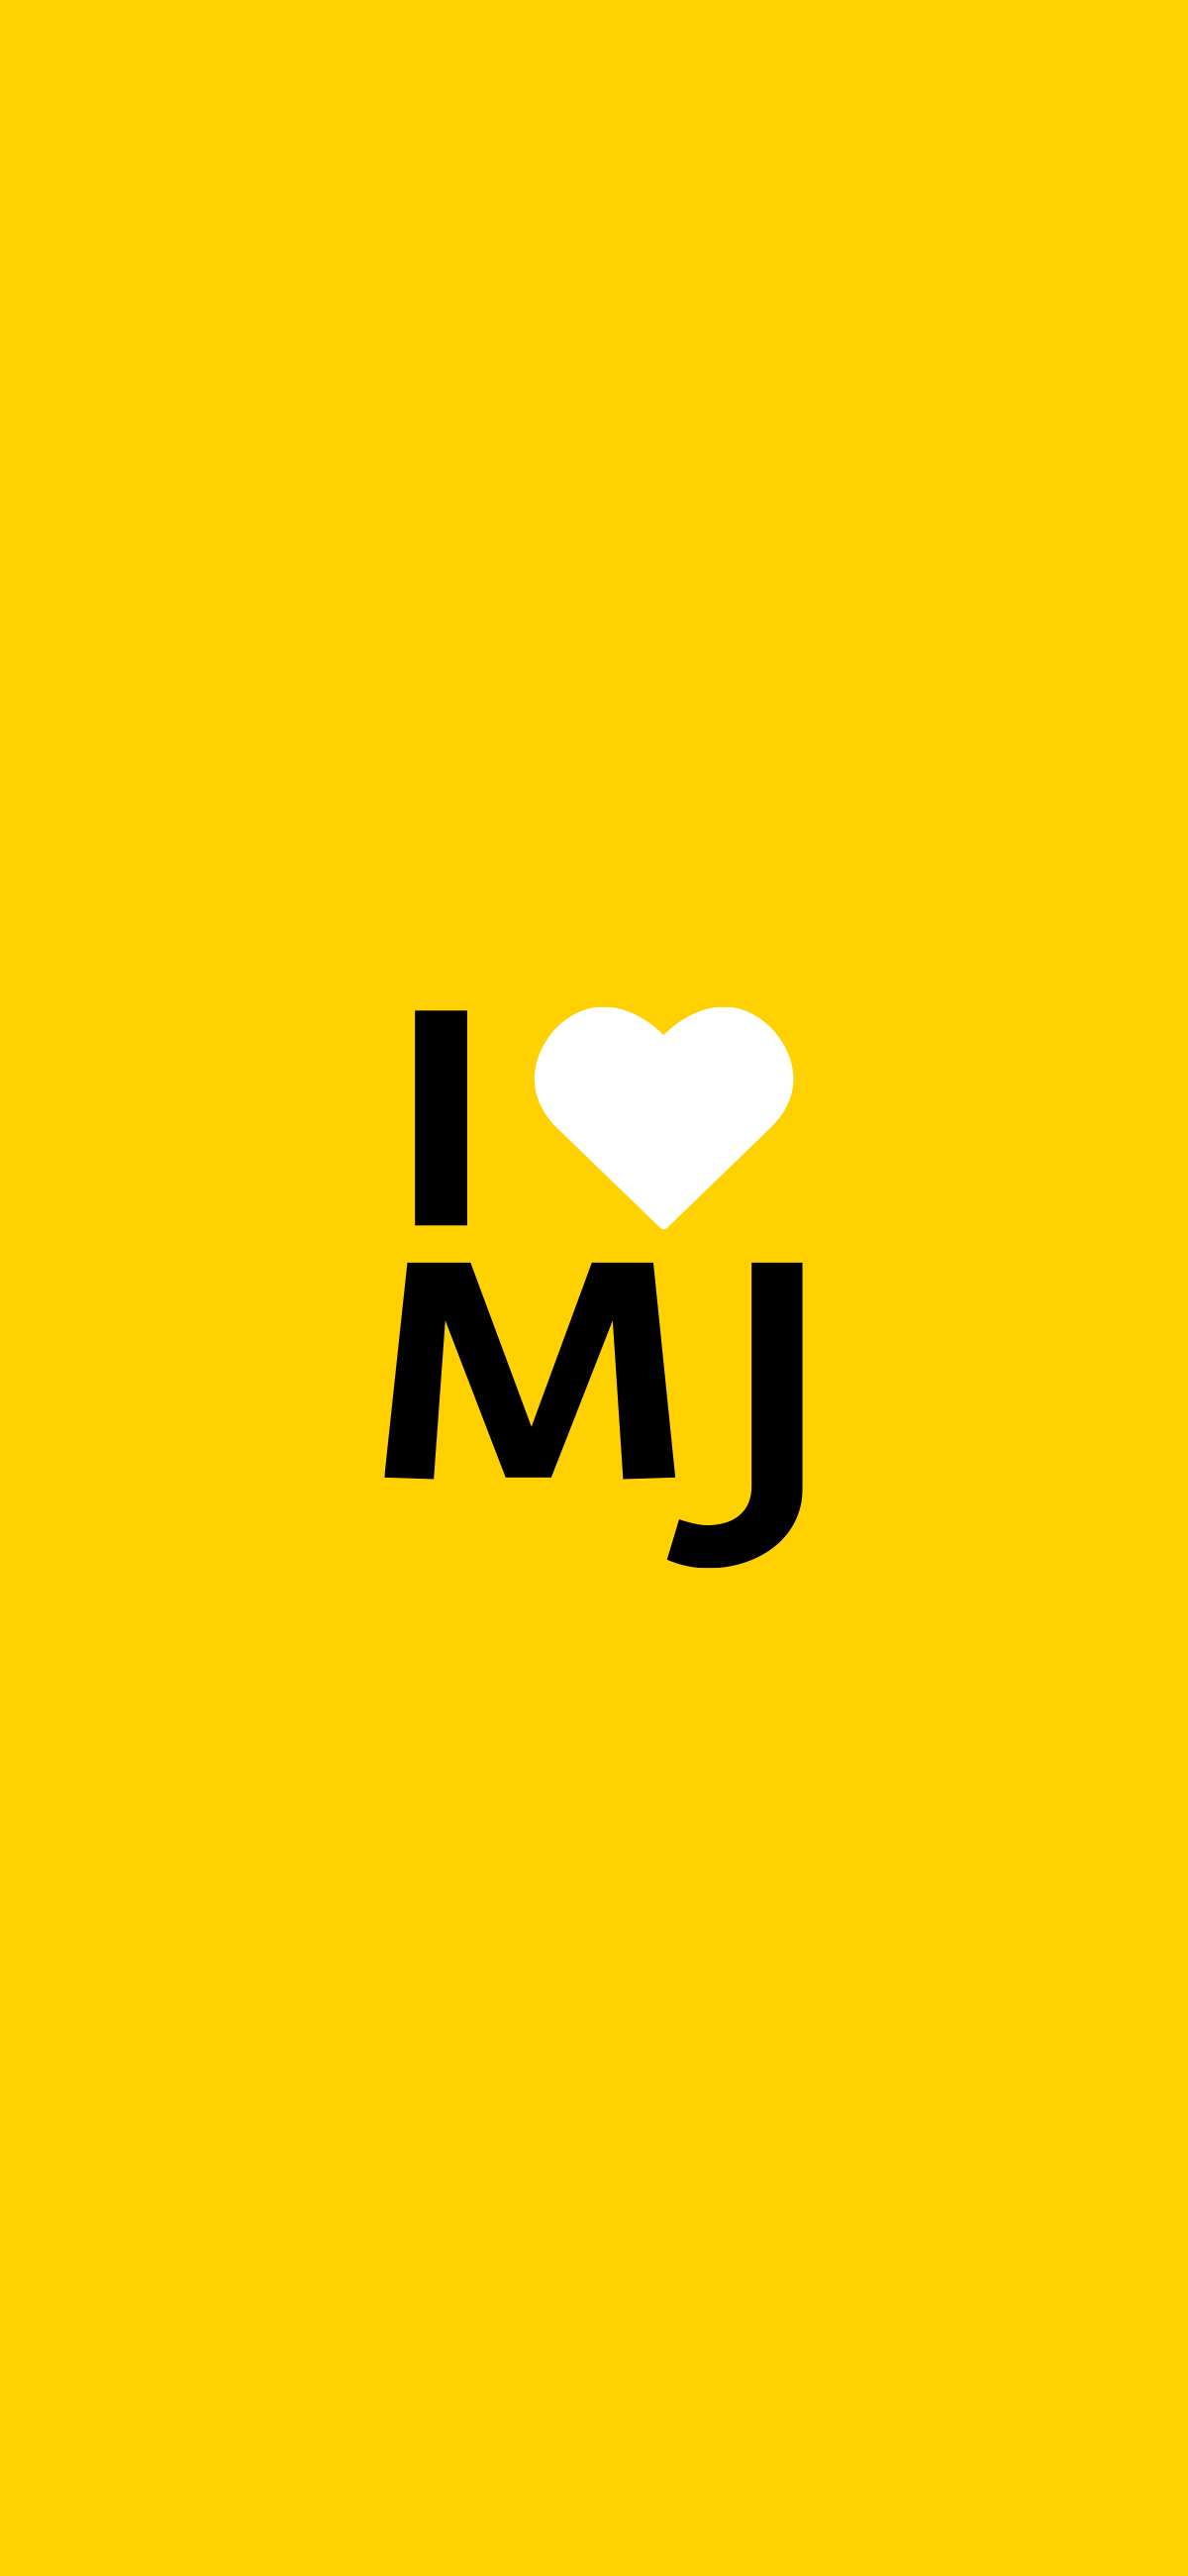 I Love MJ - Yellow